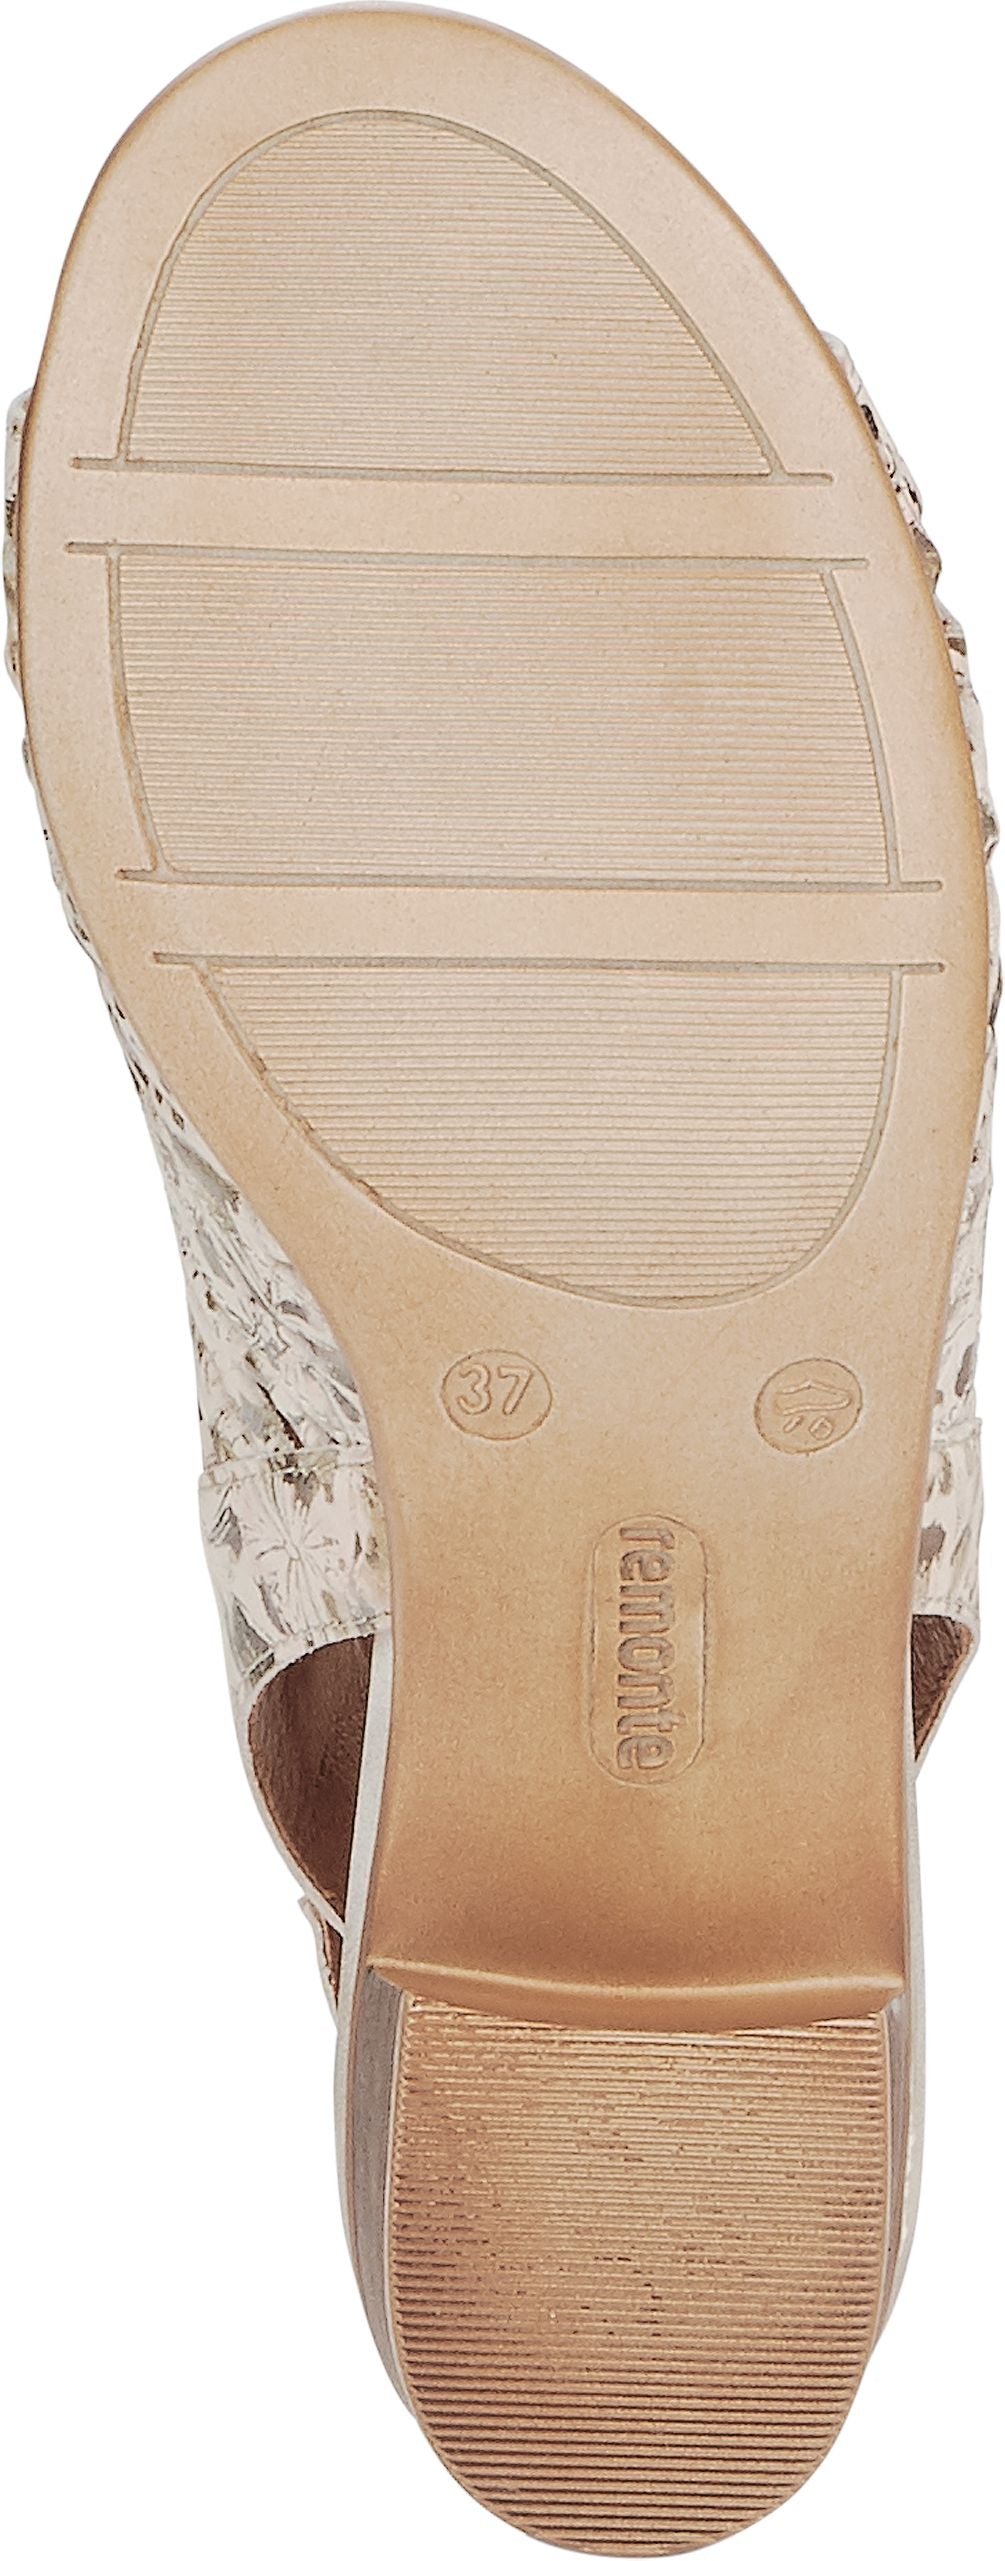 Remonte Sandals Beige Metallic Perforated Sandal